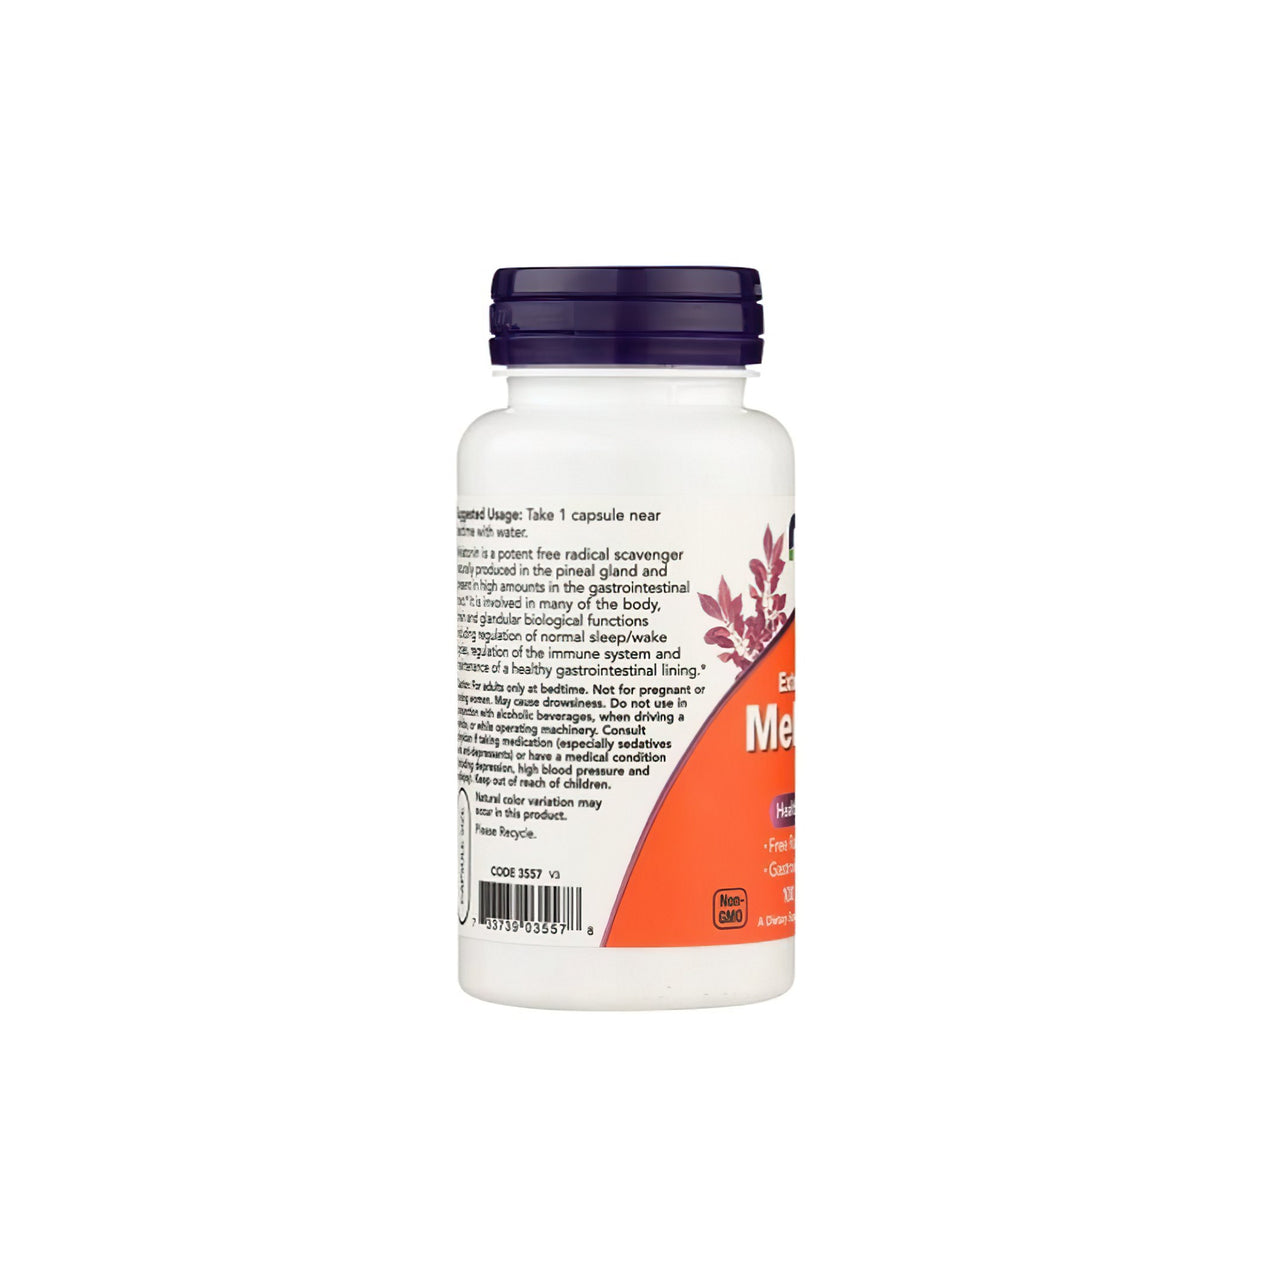 A bottle of Now Foods Melatonin 10 mg 100 vege capsules.